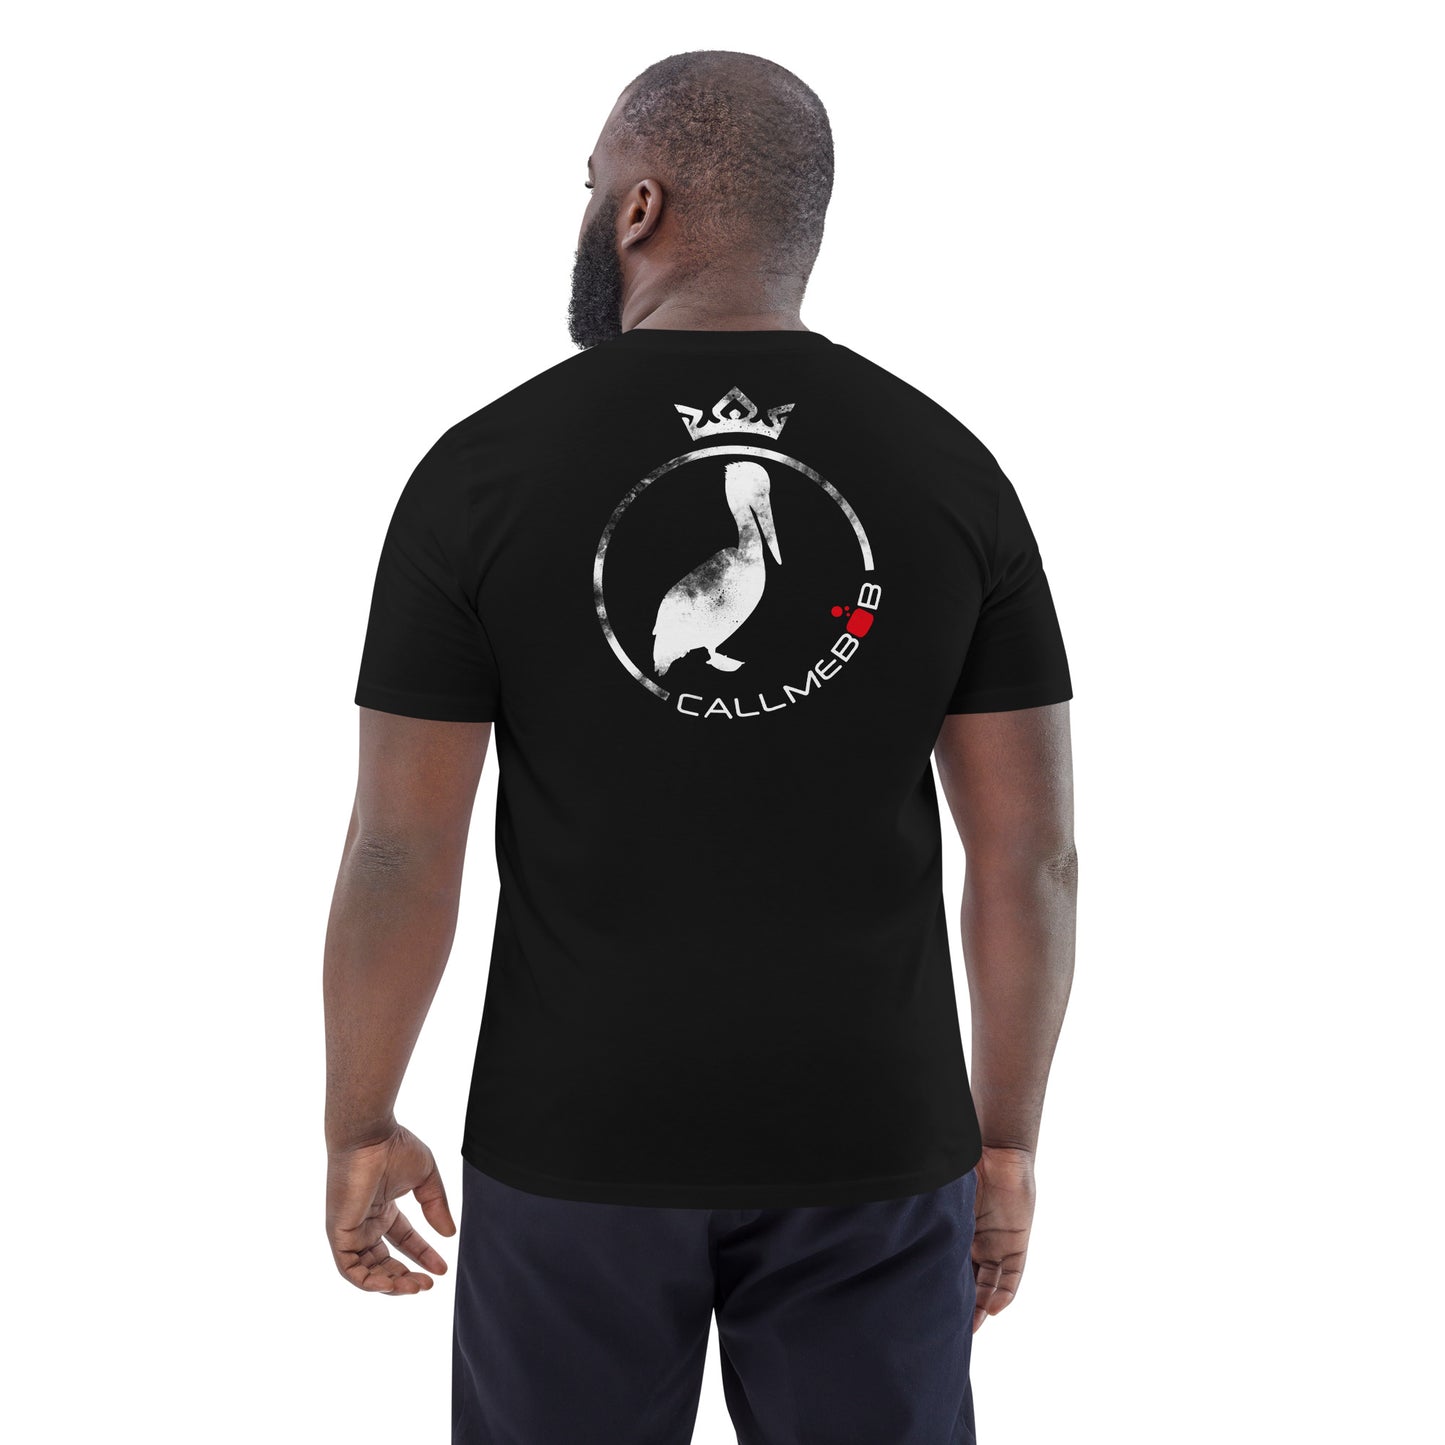 Pelican, organic cotton t-shirt